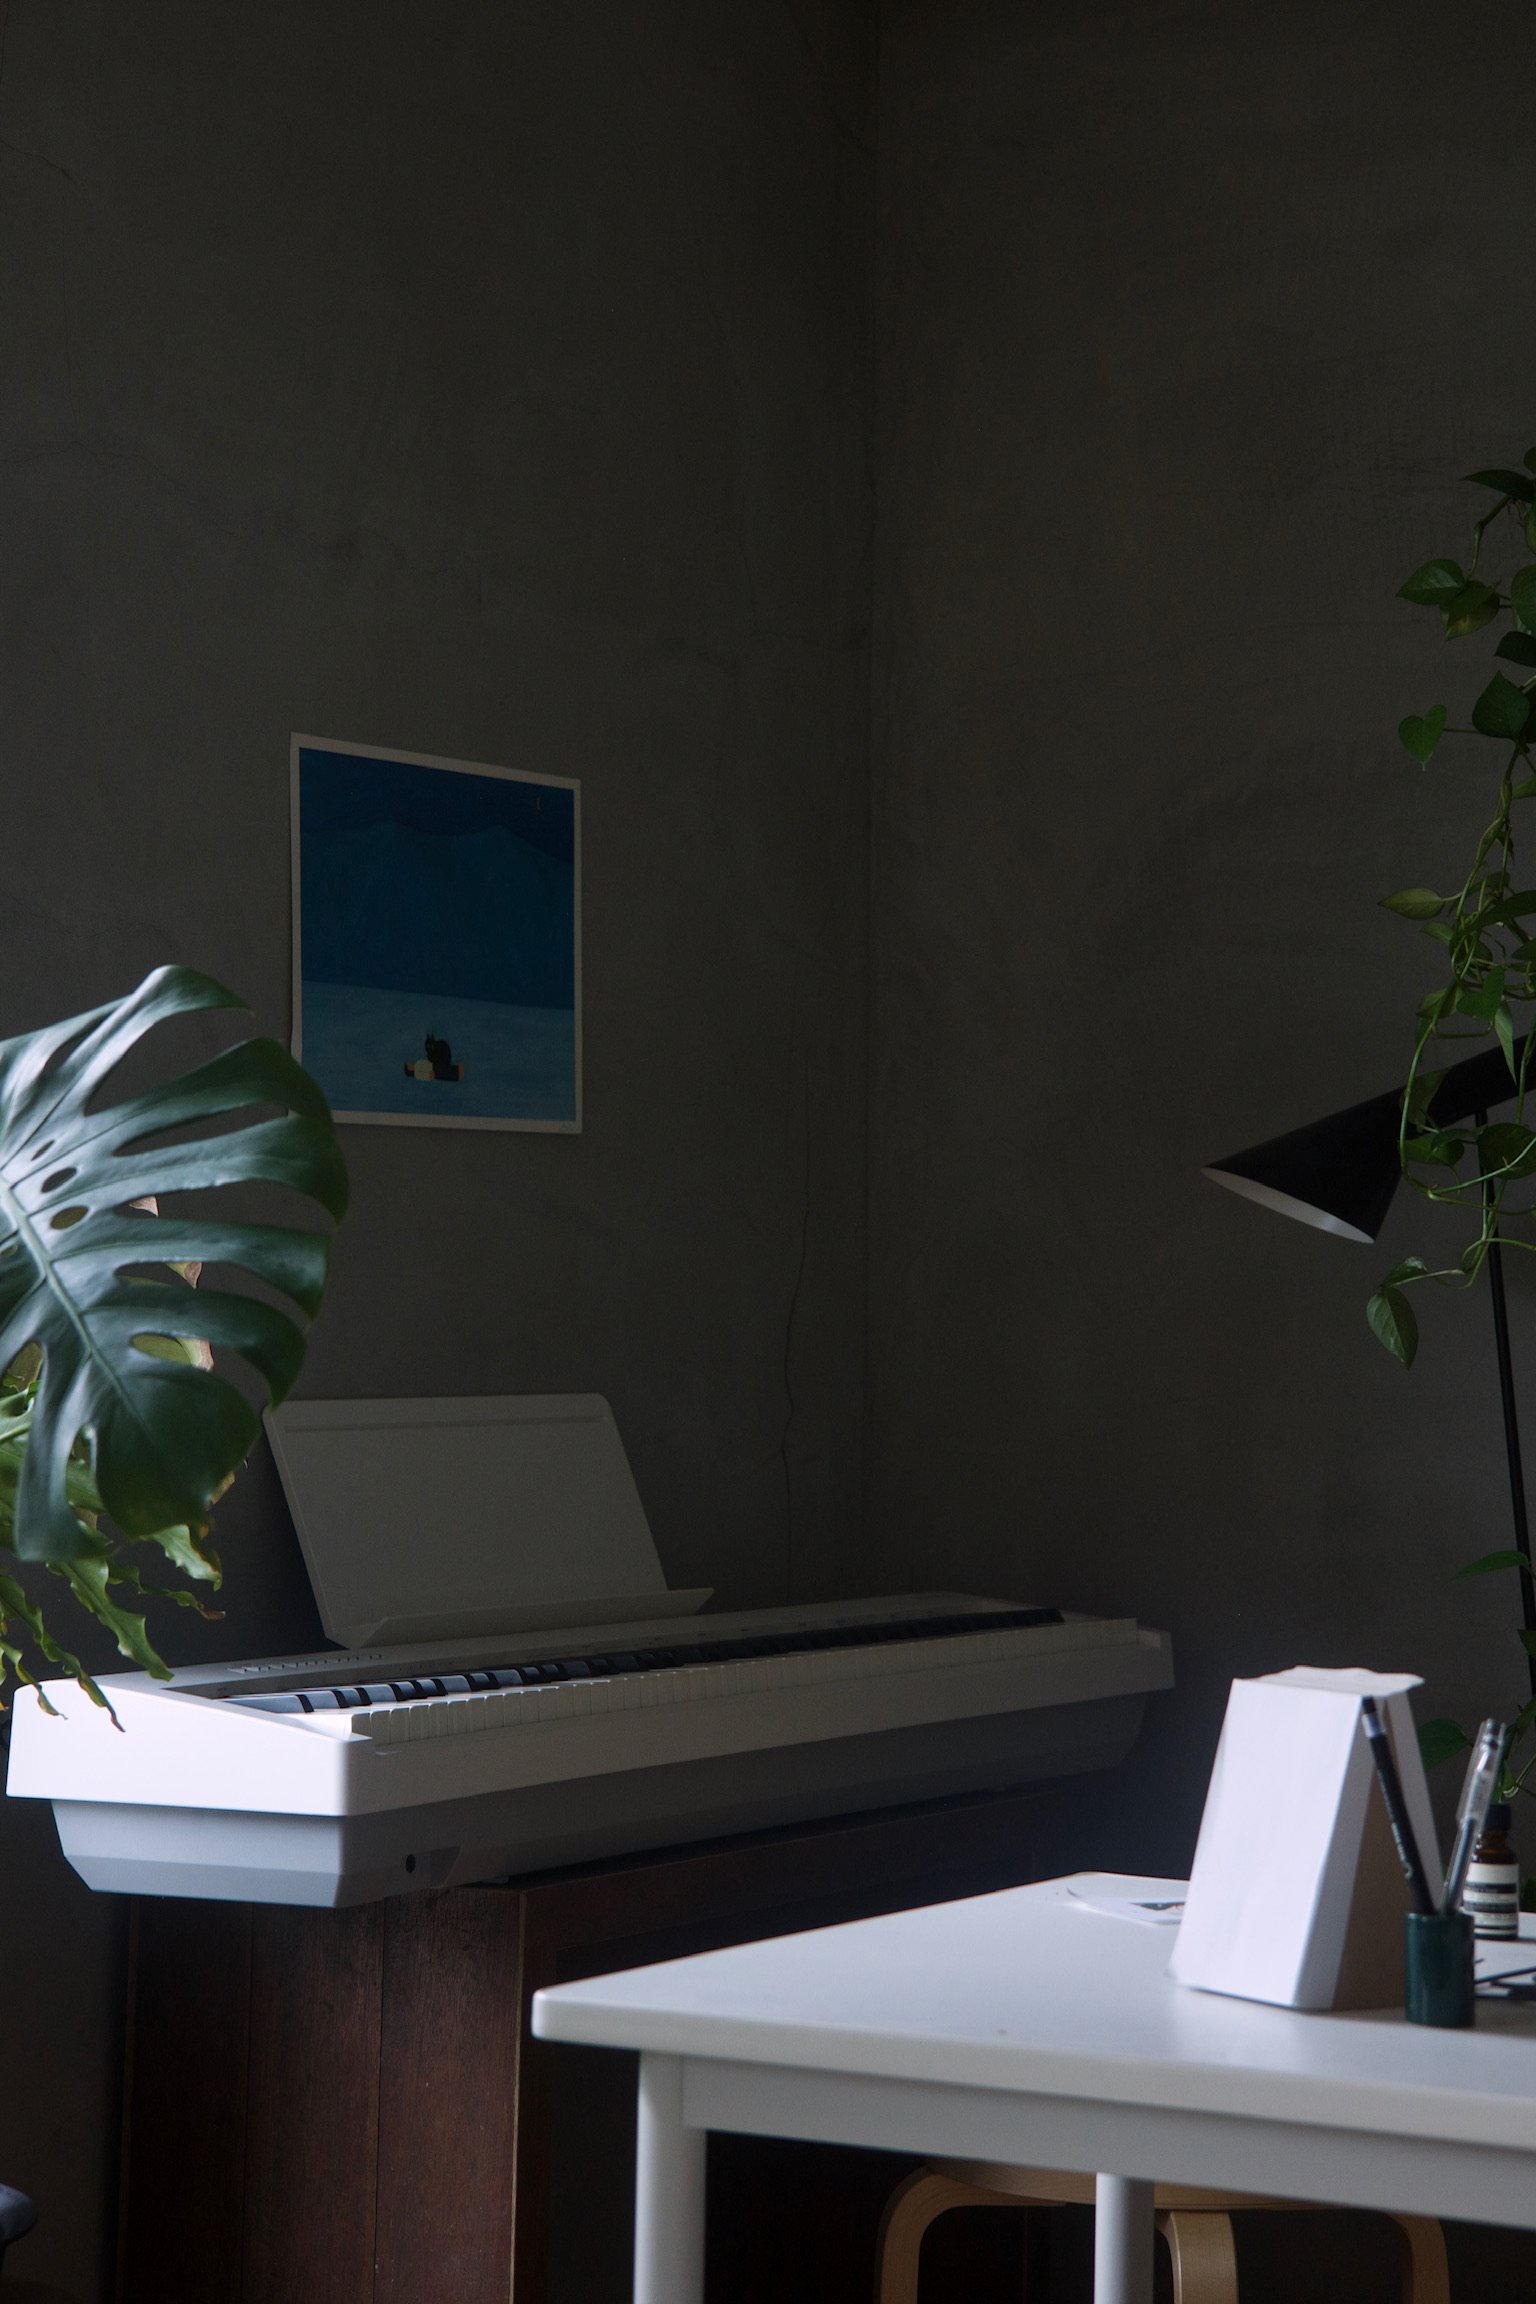 A Roland FP30X piano, plants, AJ floor lamp.